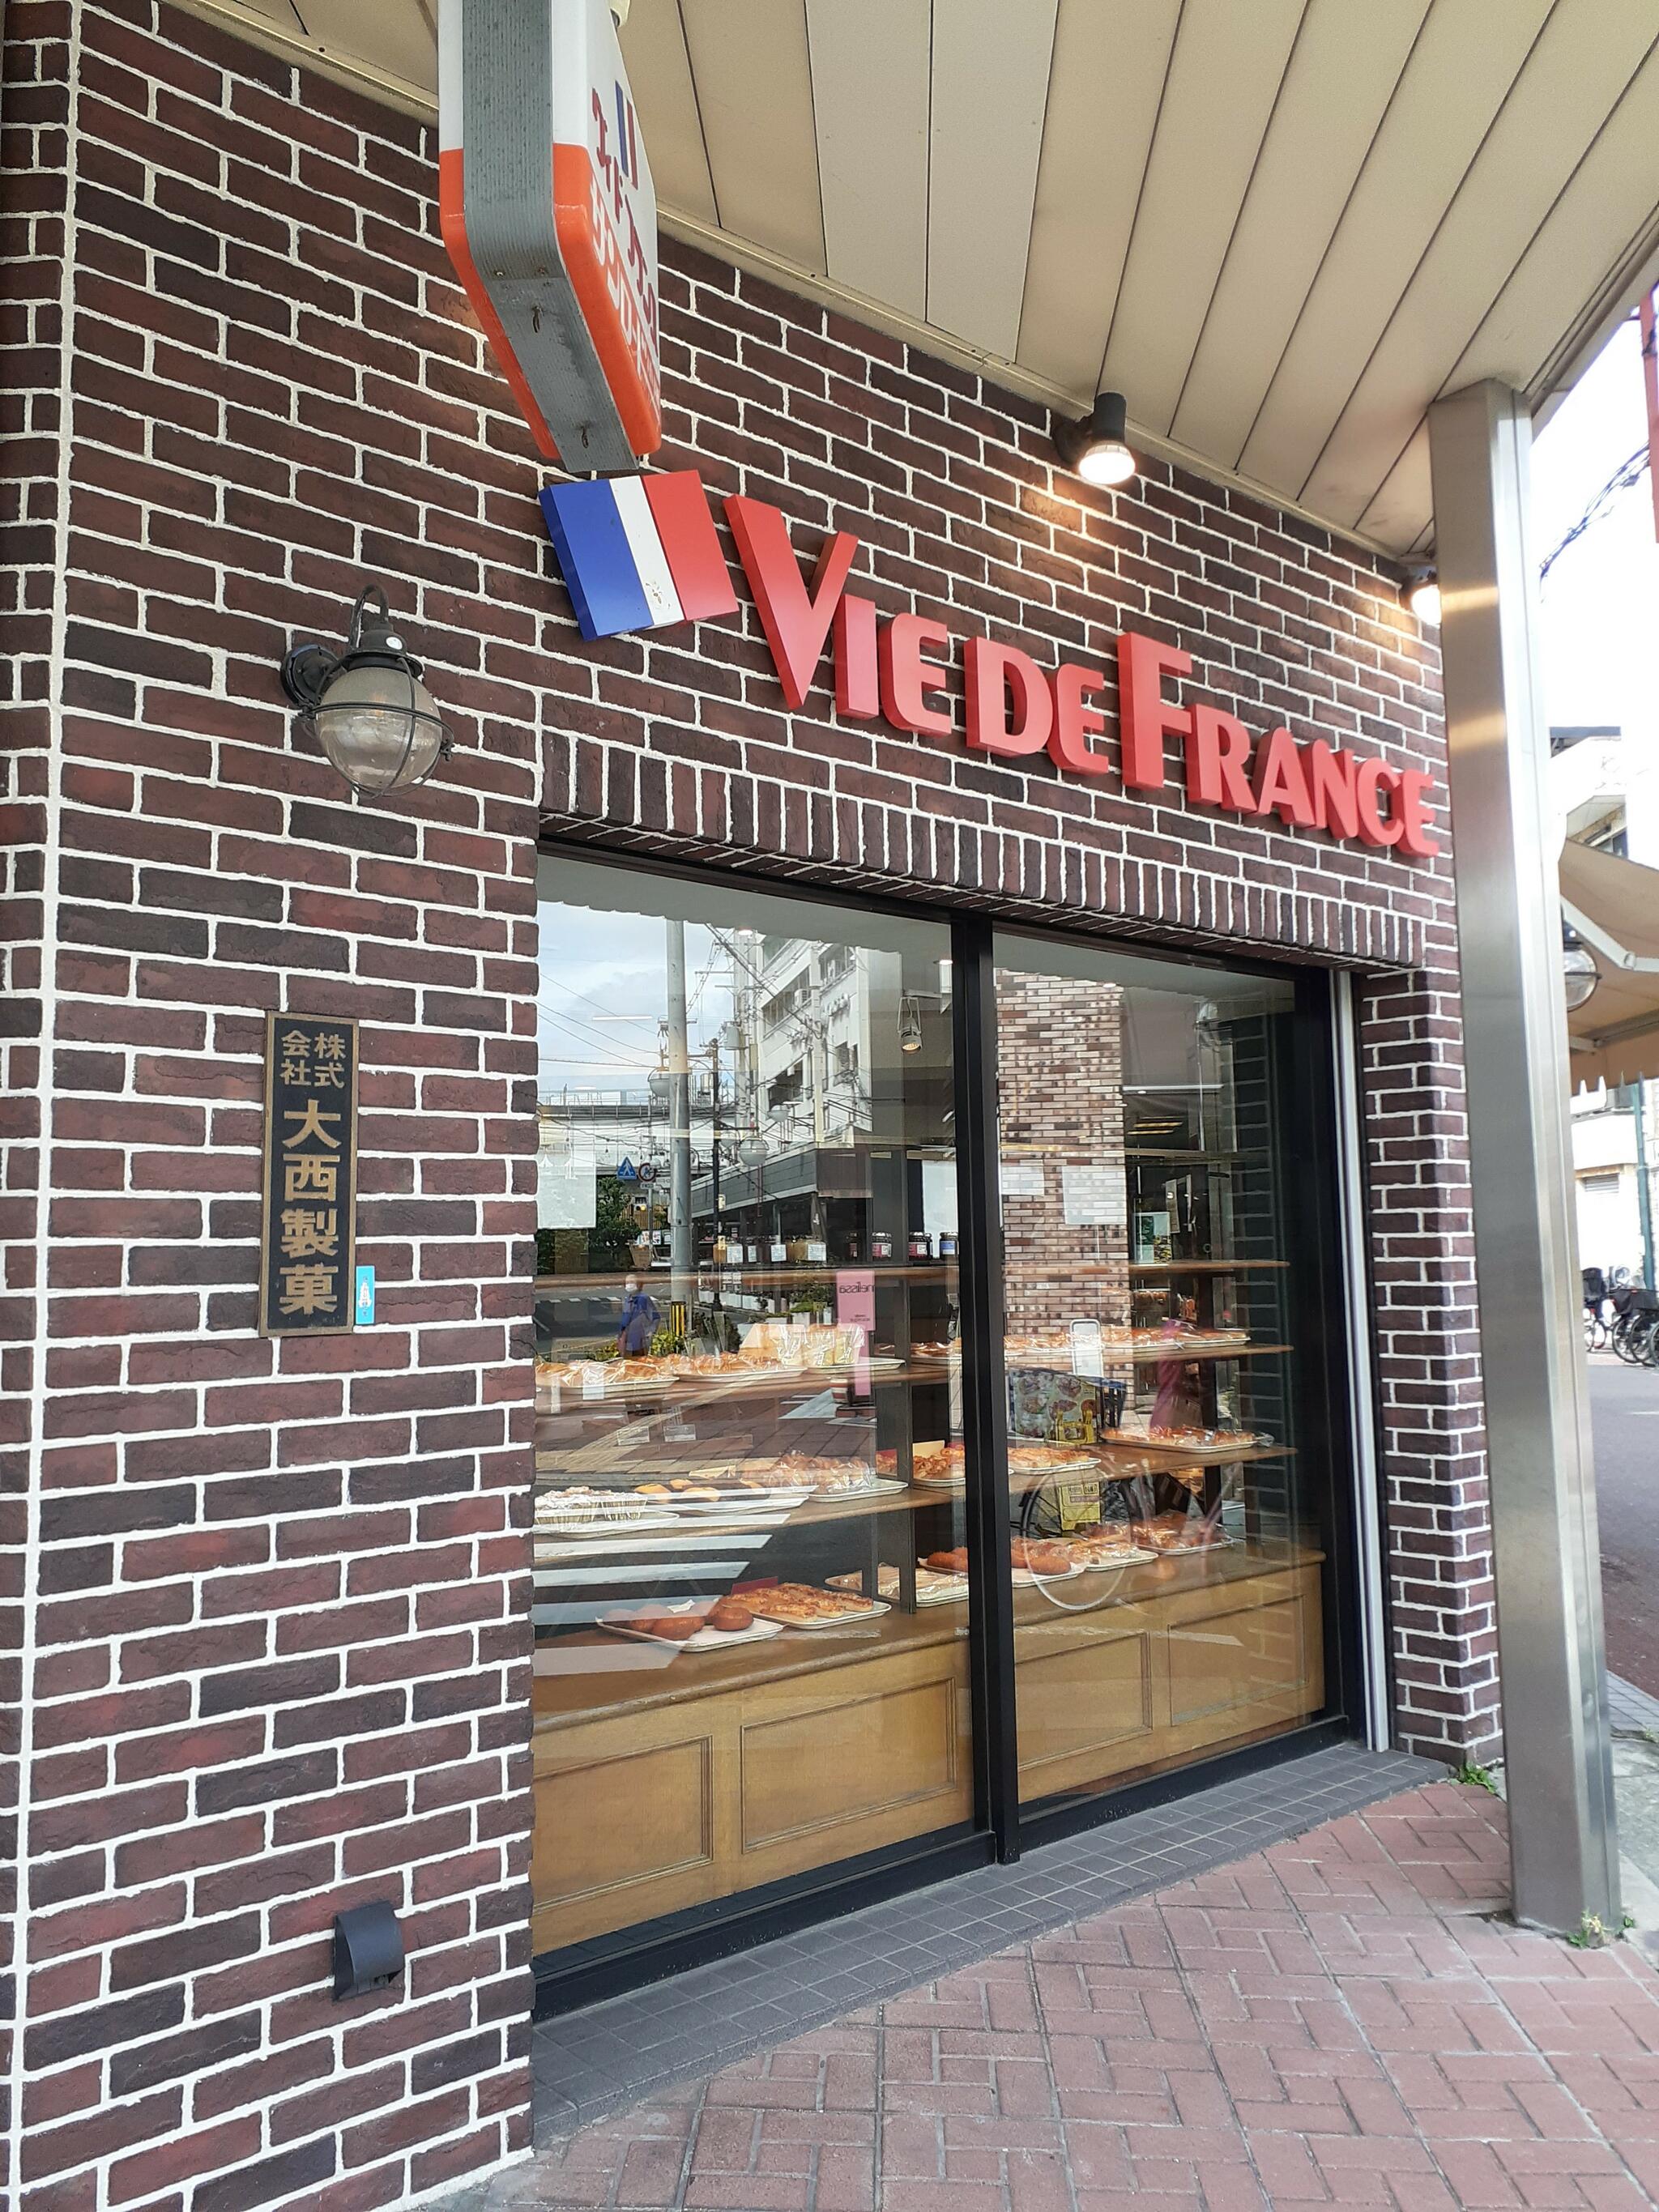 VIE DE FRANCE 小阪店の代表写真8